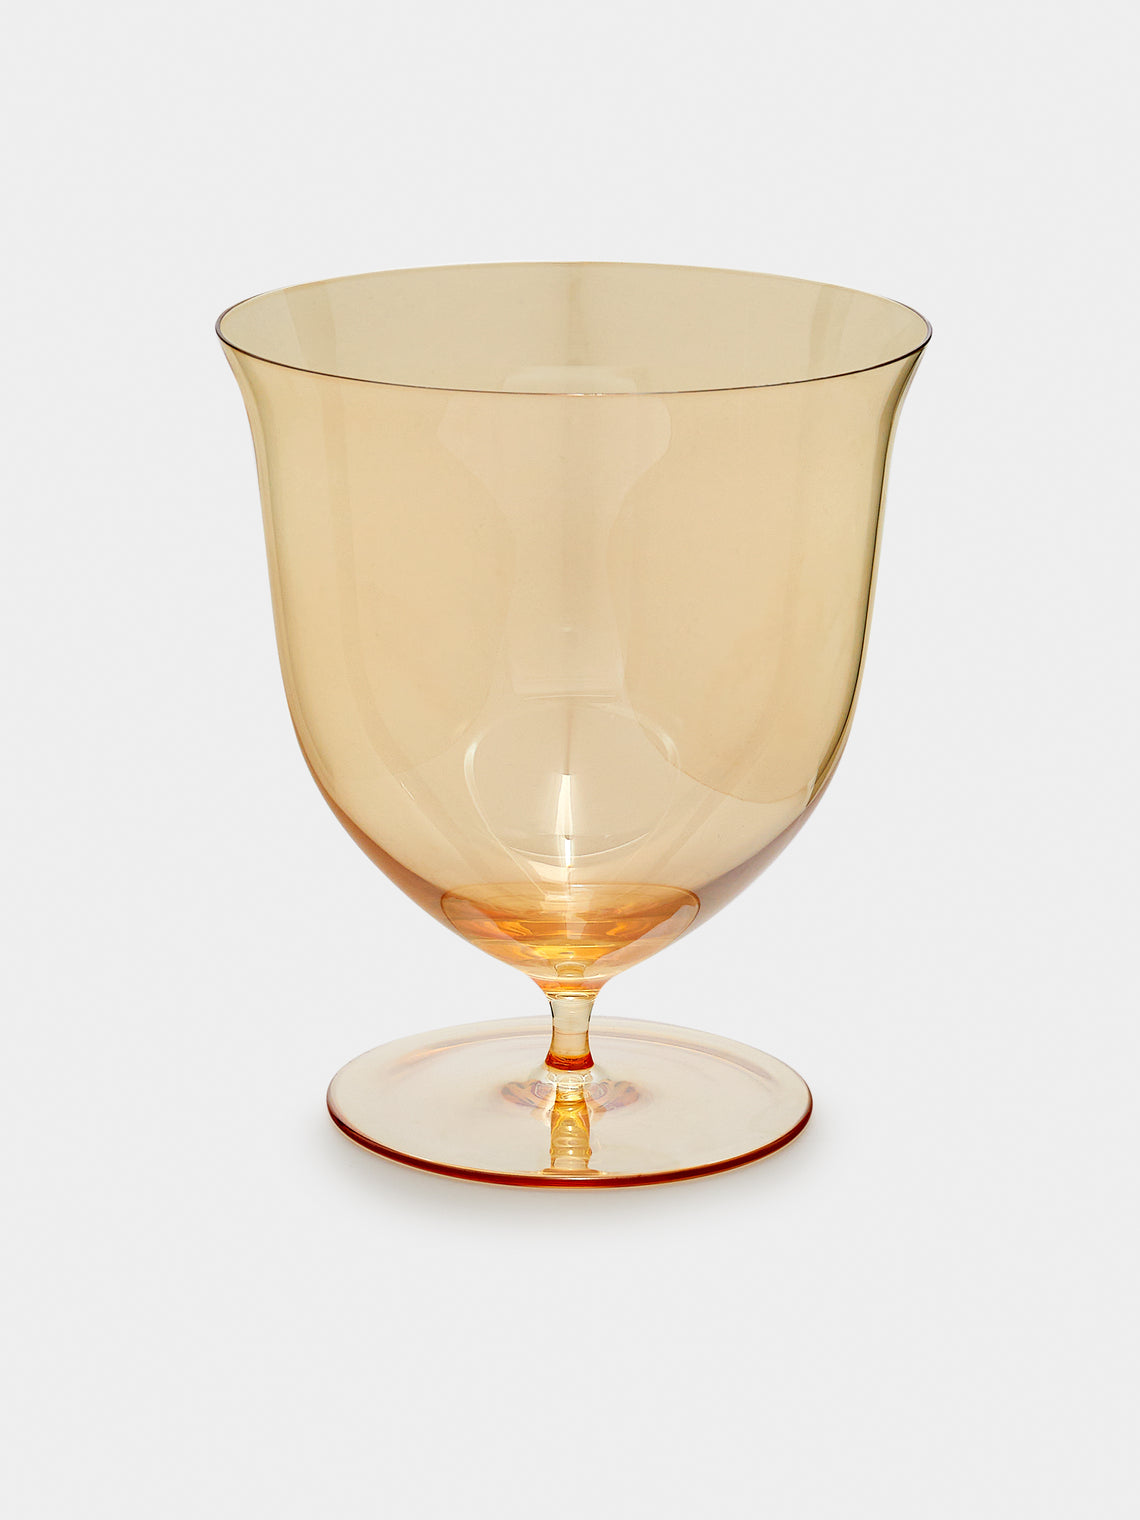 Lobmeyr - Patrician Gold Lustre Hand-Blown Crystal Vase - Gold - ABASK - 